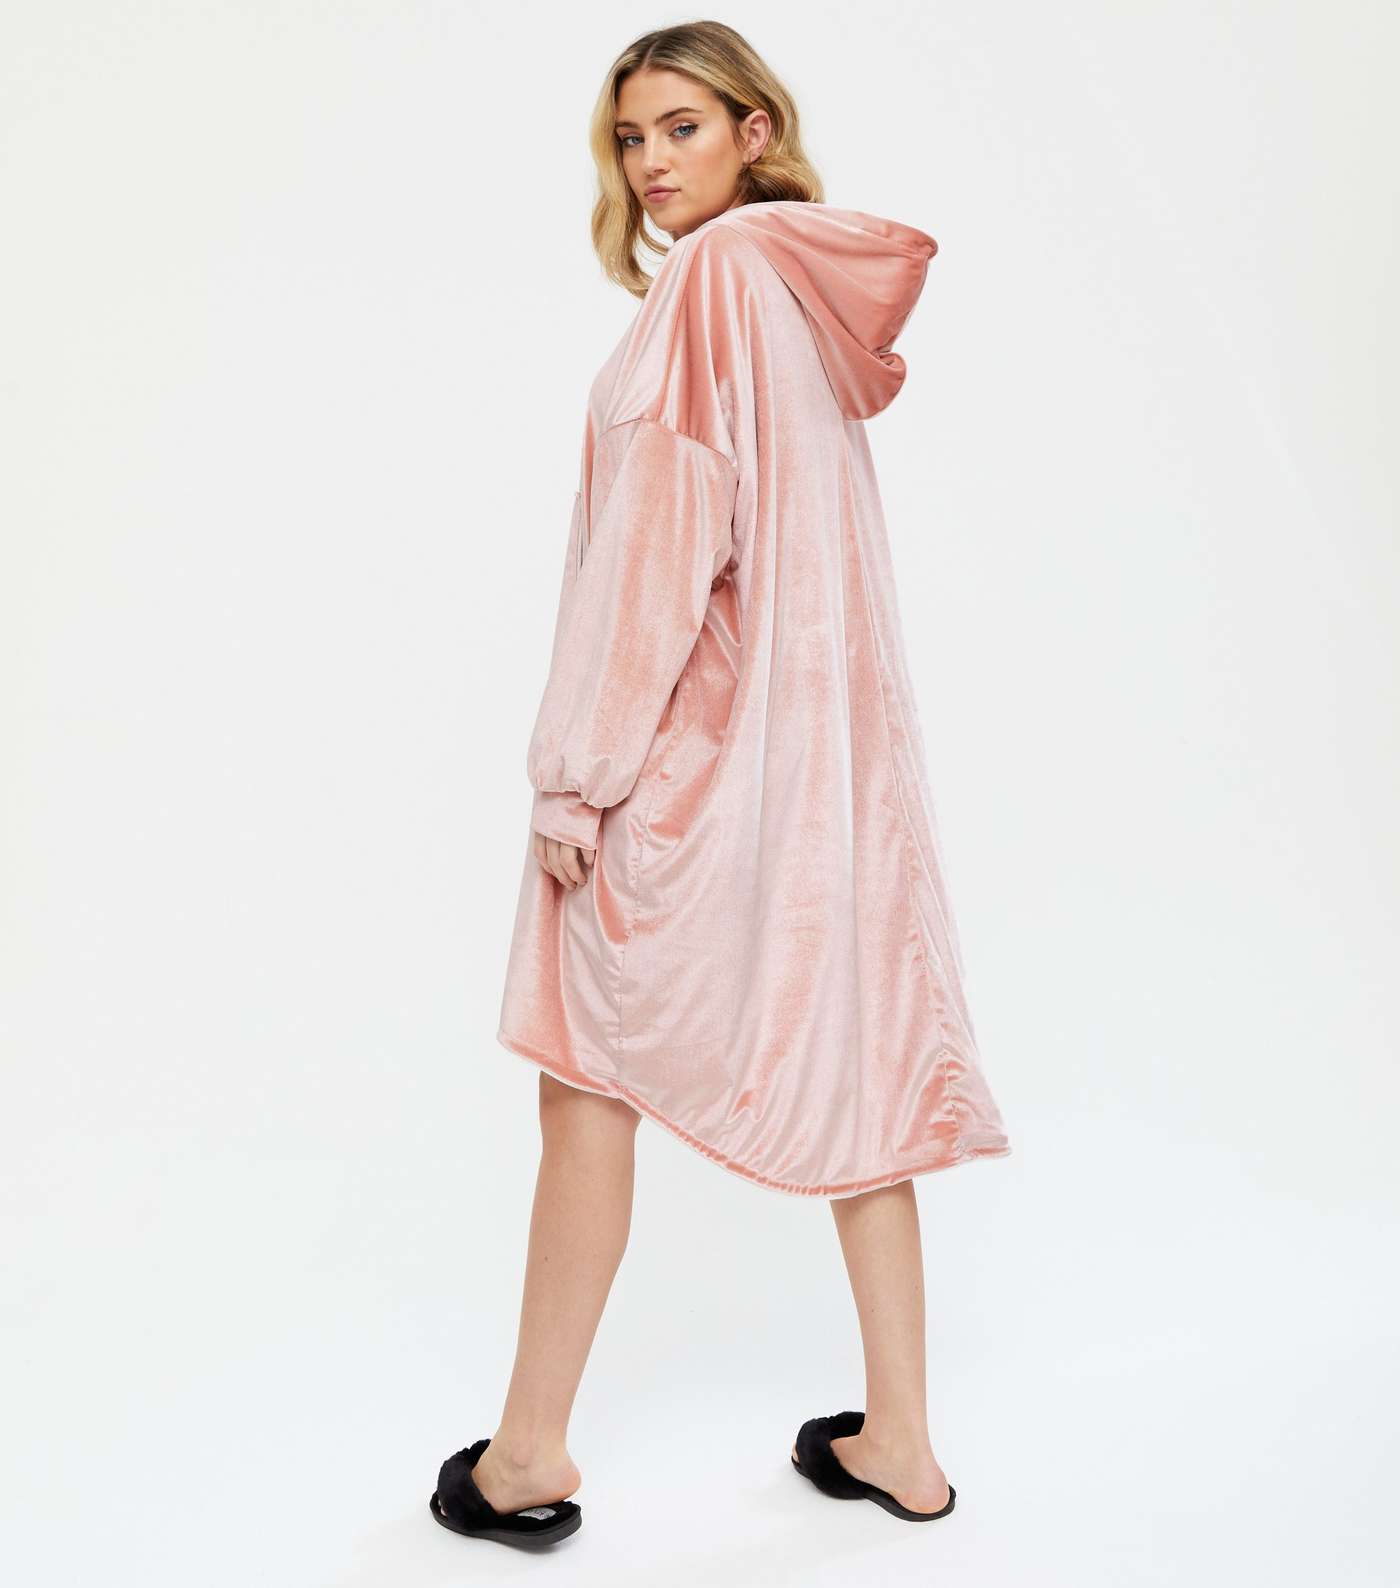 Cameo Rose Pink Soft Blanket Hoodie Image 4